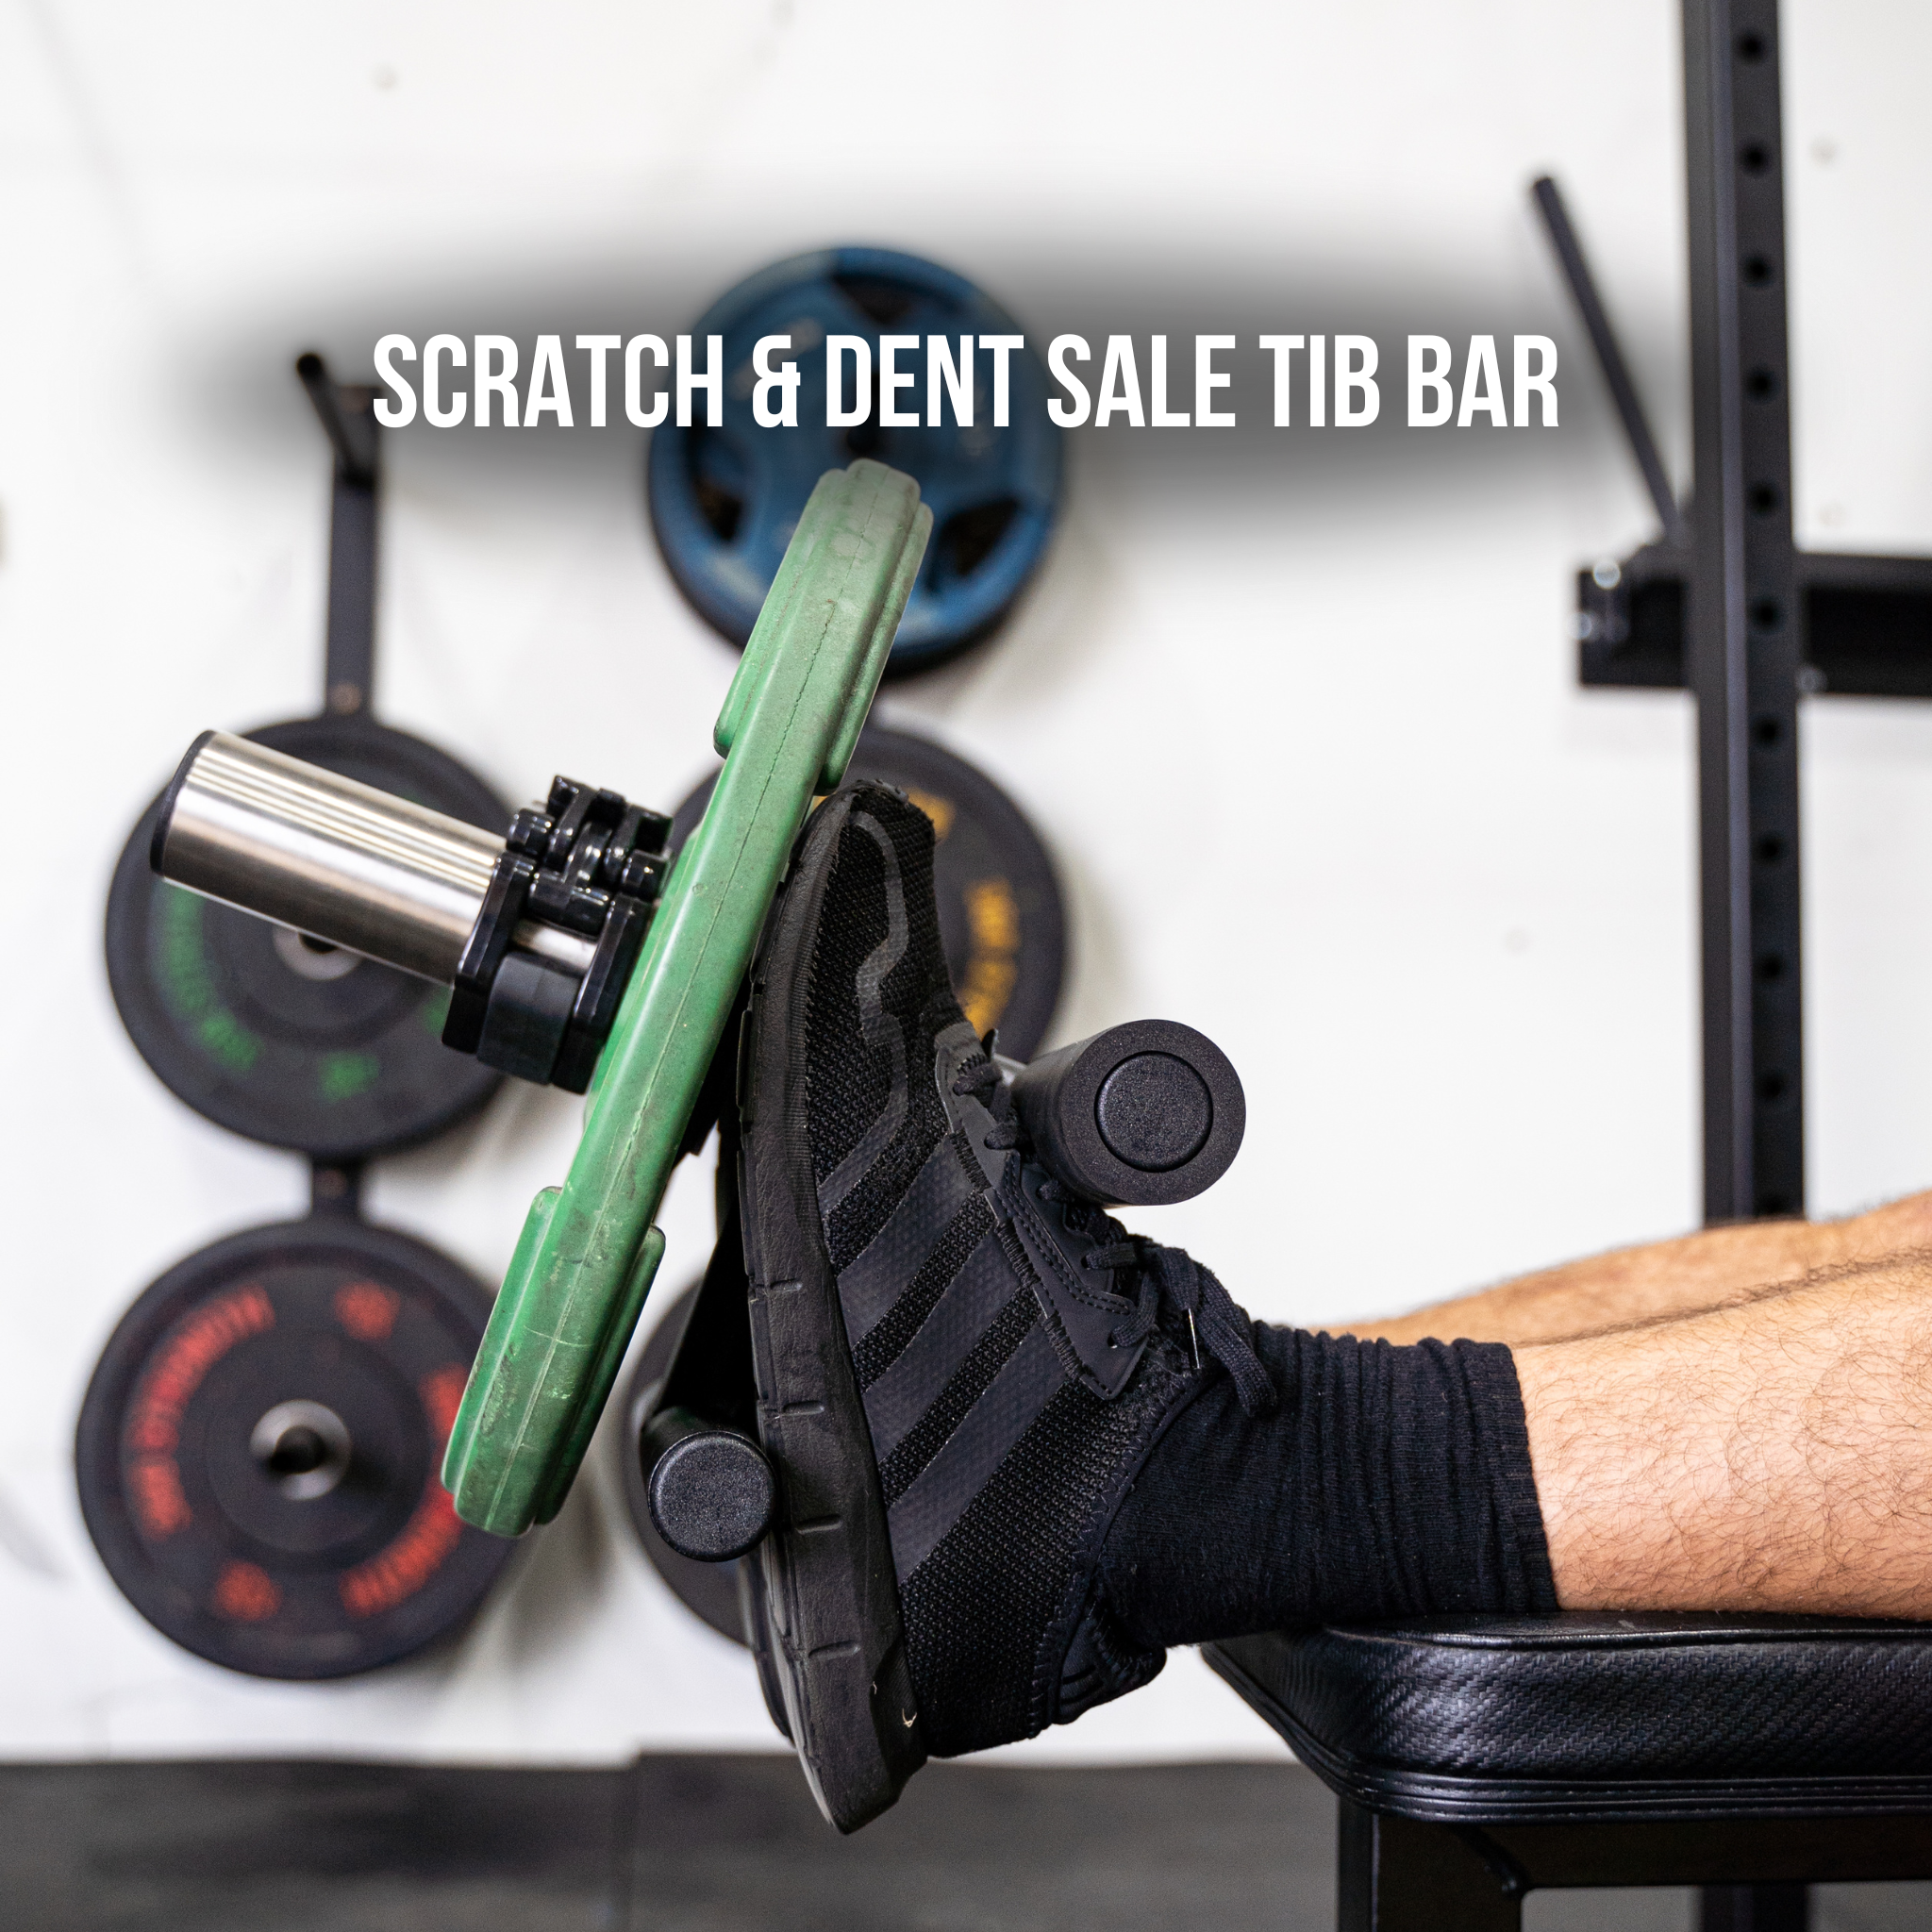 SCRATCH & DENT SALE - The Tib Bar™